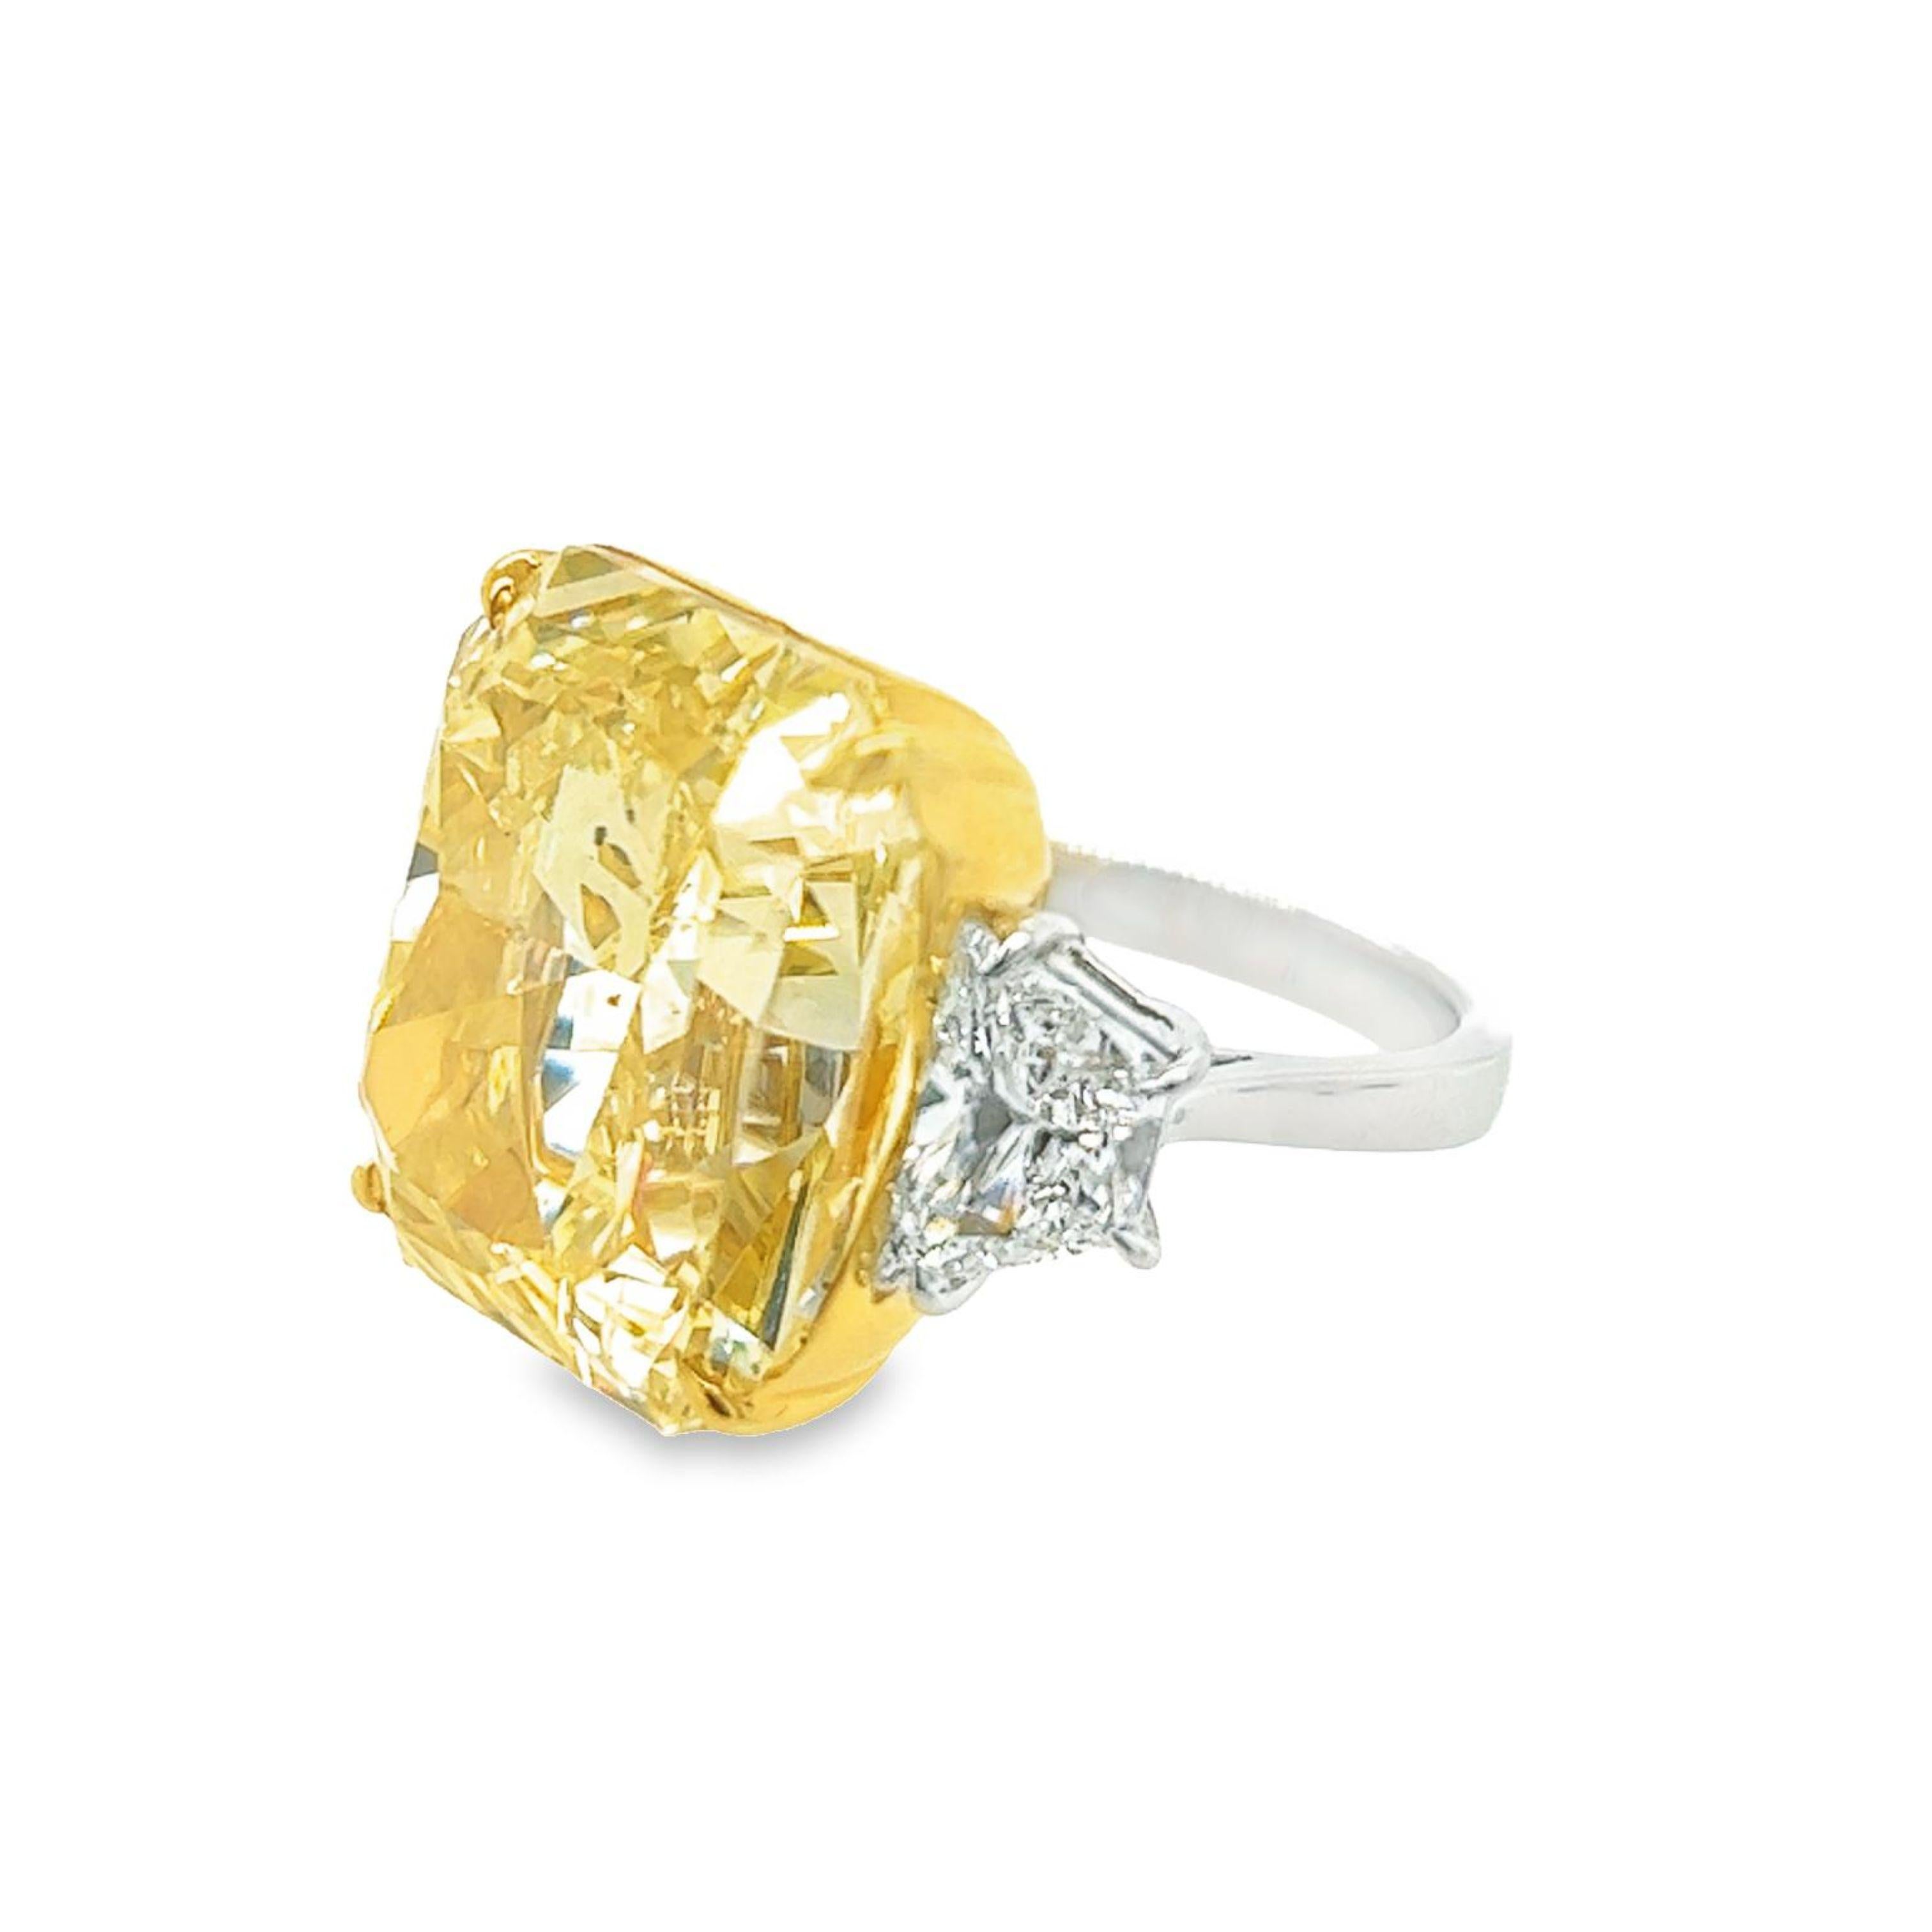 Verlobungsring mit 32,01 Karat strahlendem gelbem GIA-Diamant im Angebot 2